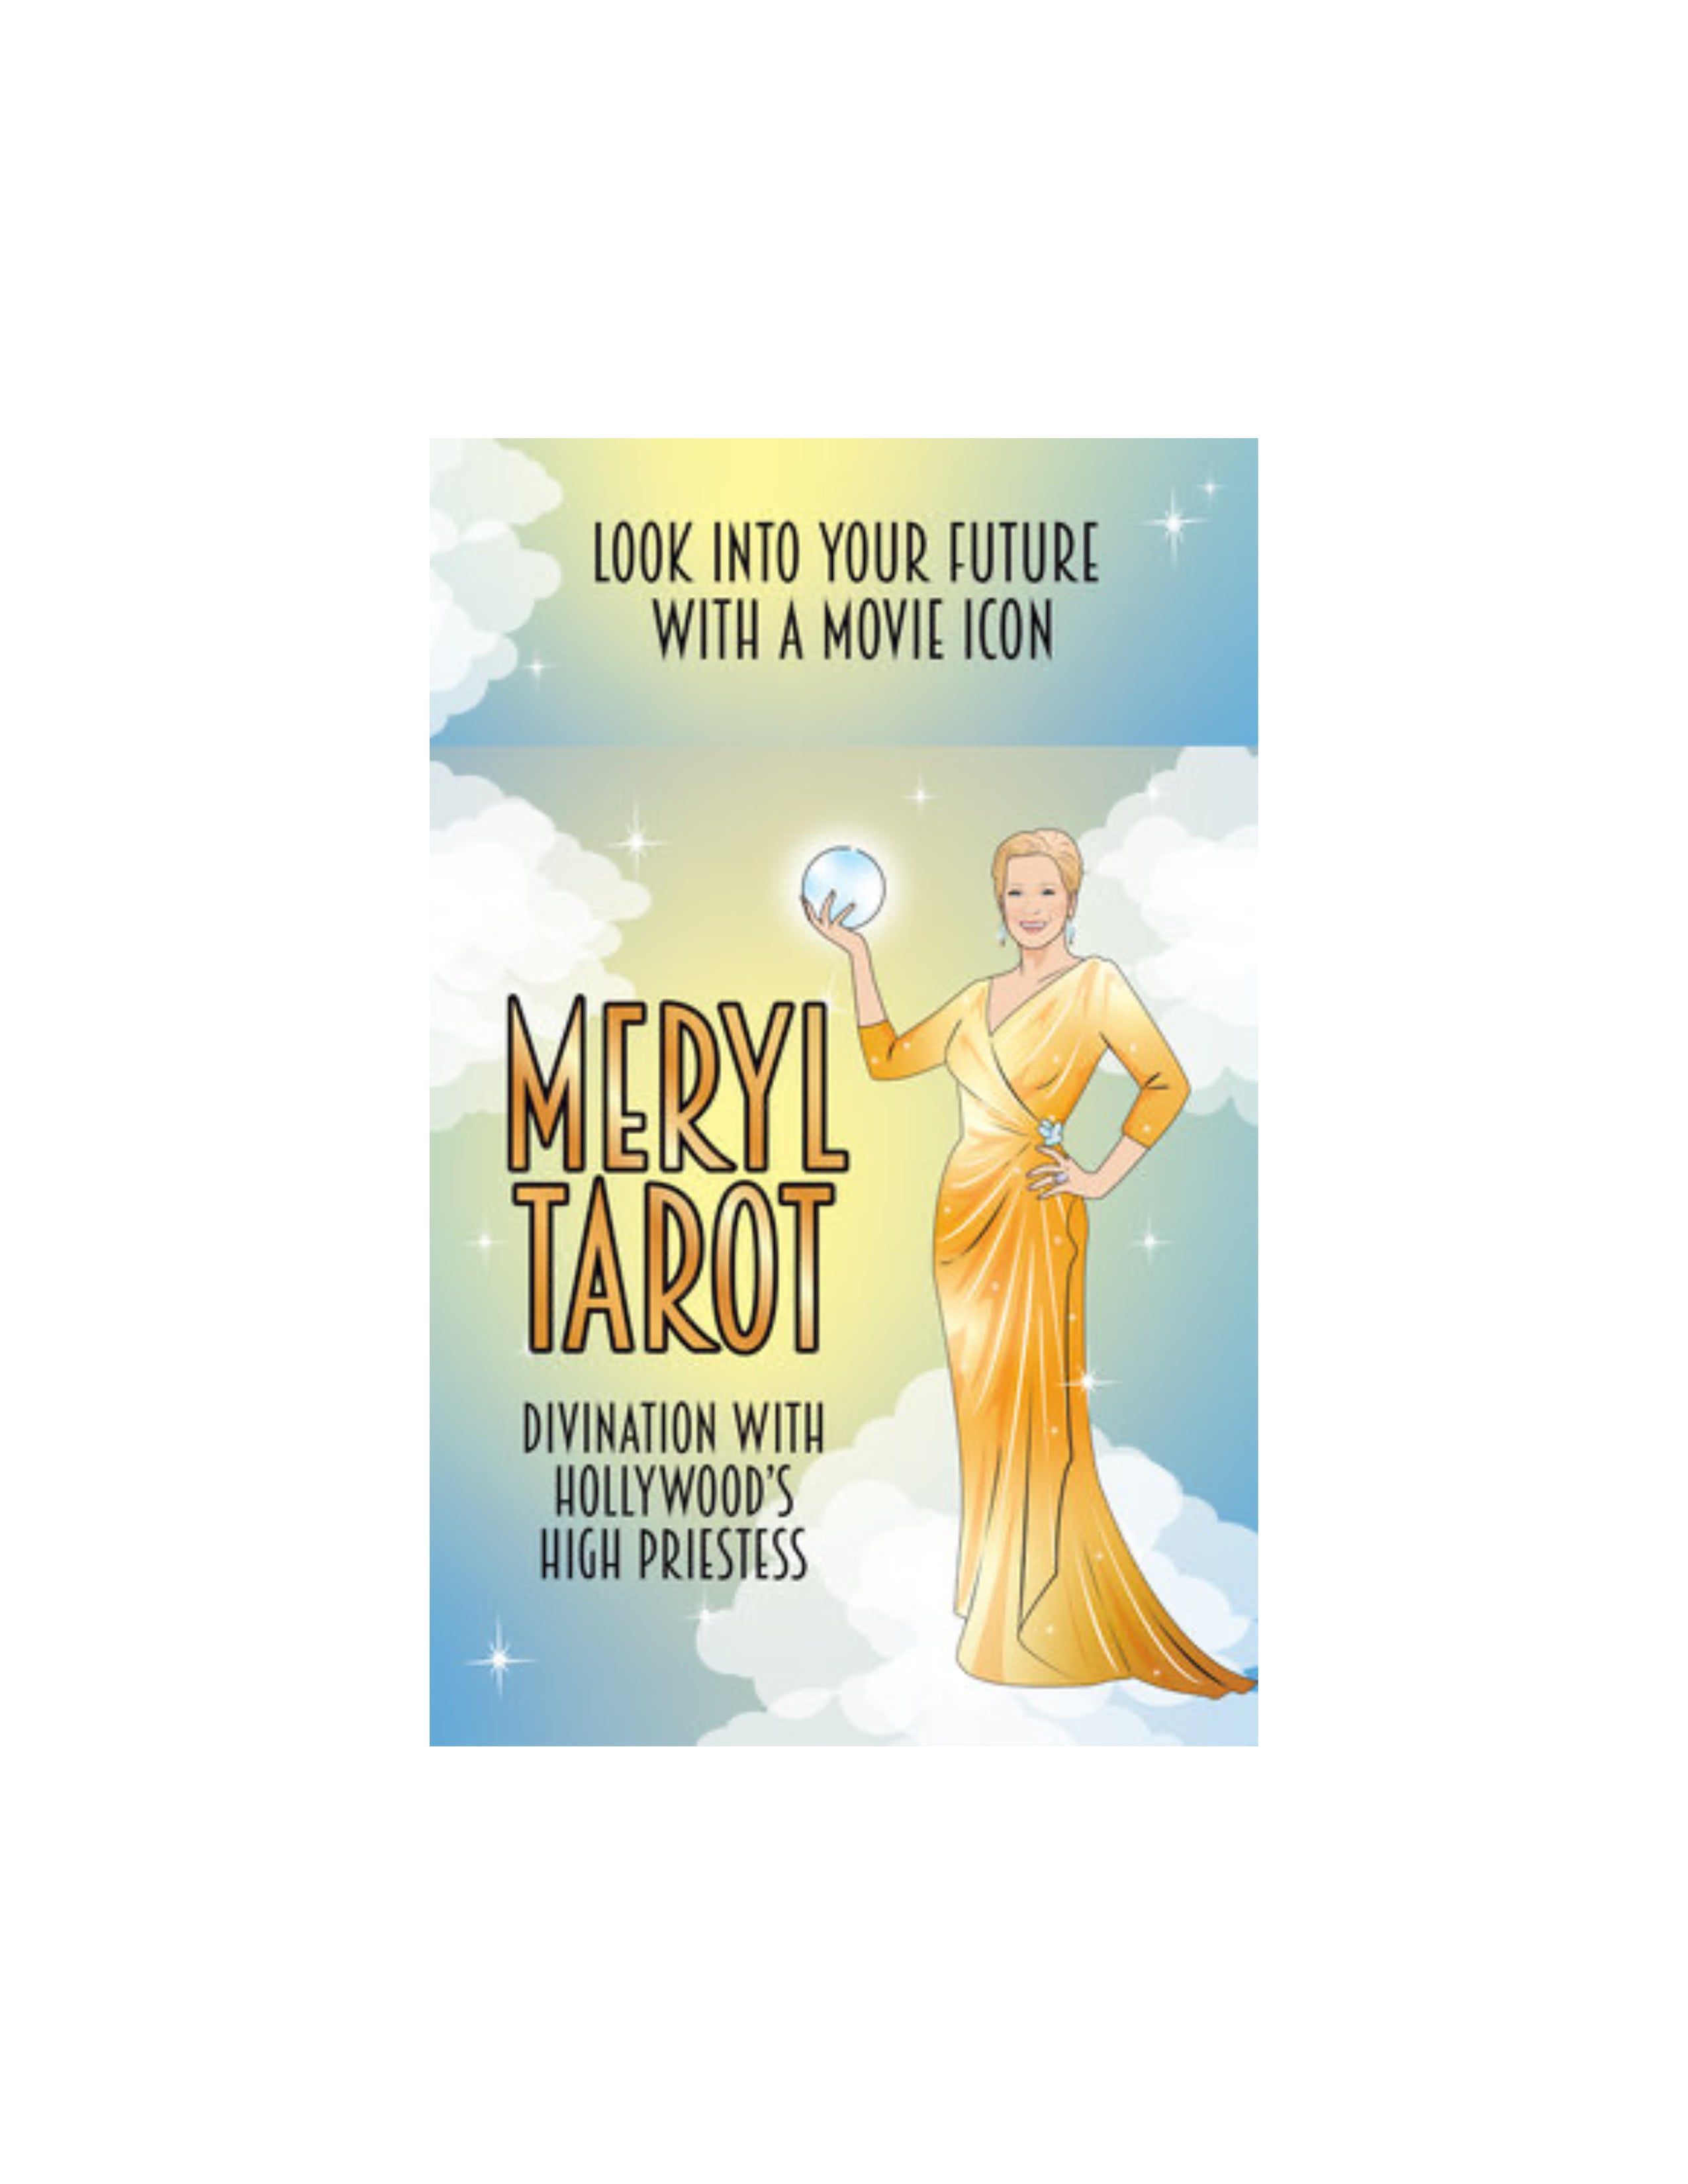 Meryl Streep Tarot